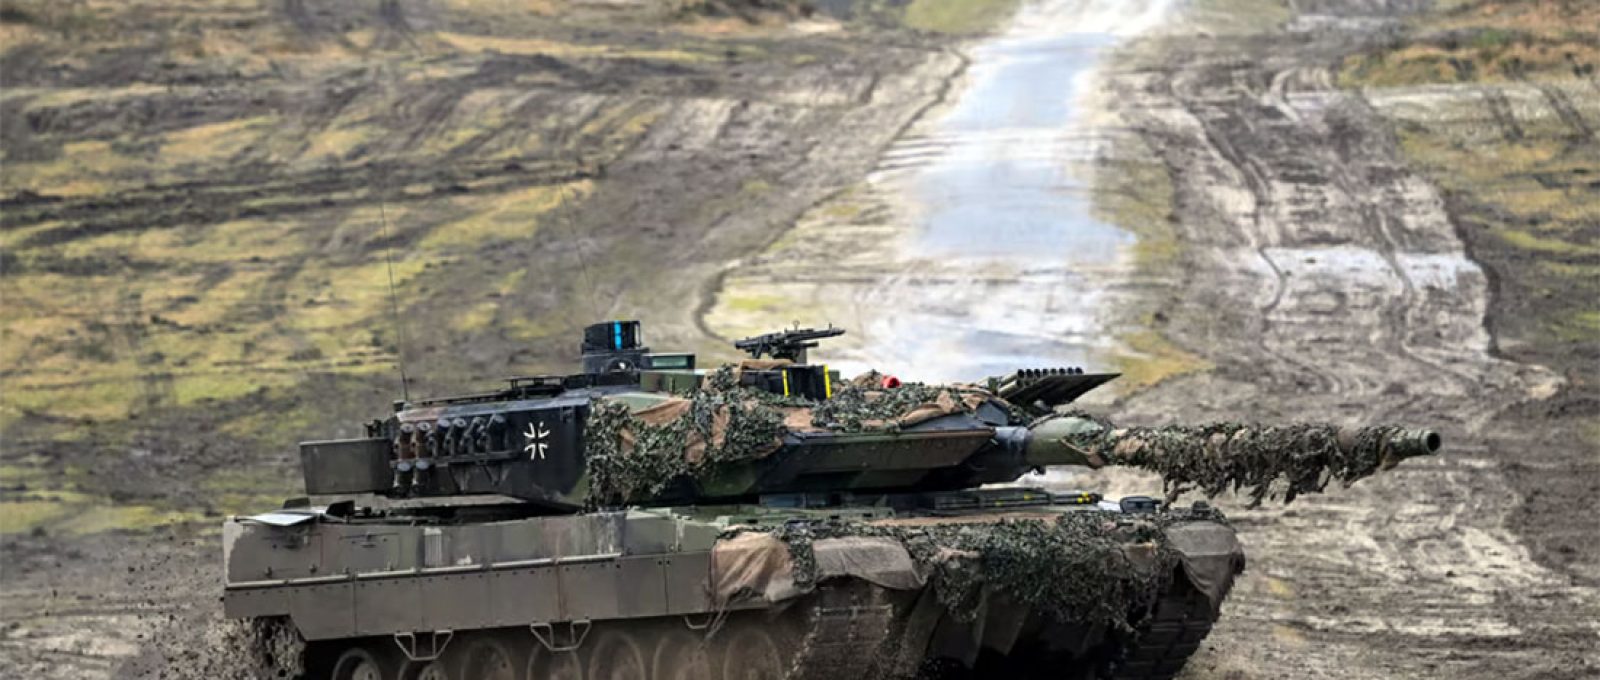 Tanque alemão Leopard 2 (Sascha Schuermann/Getty Images).